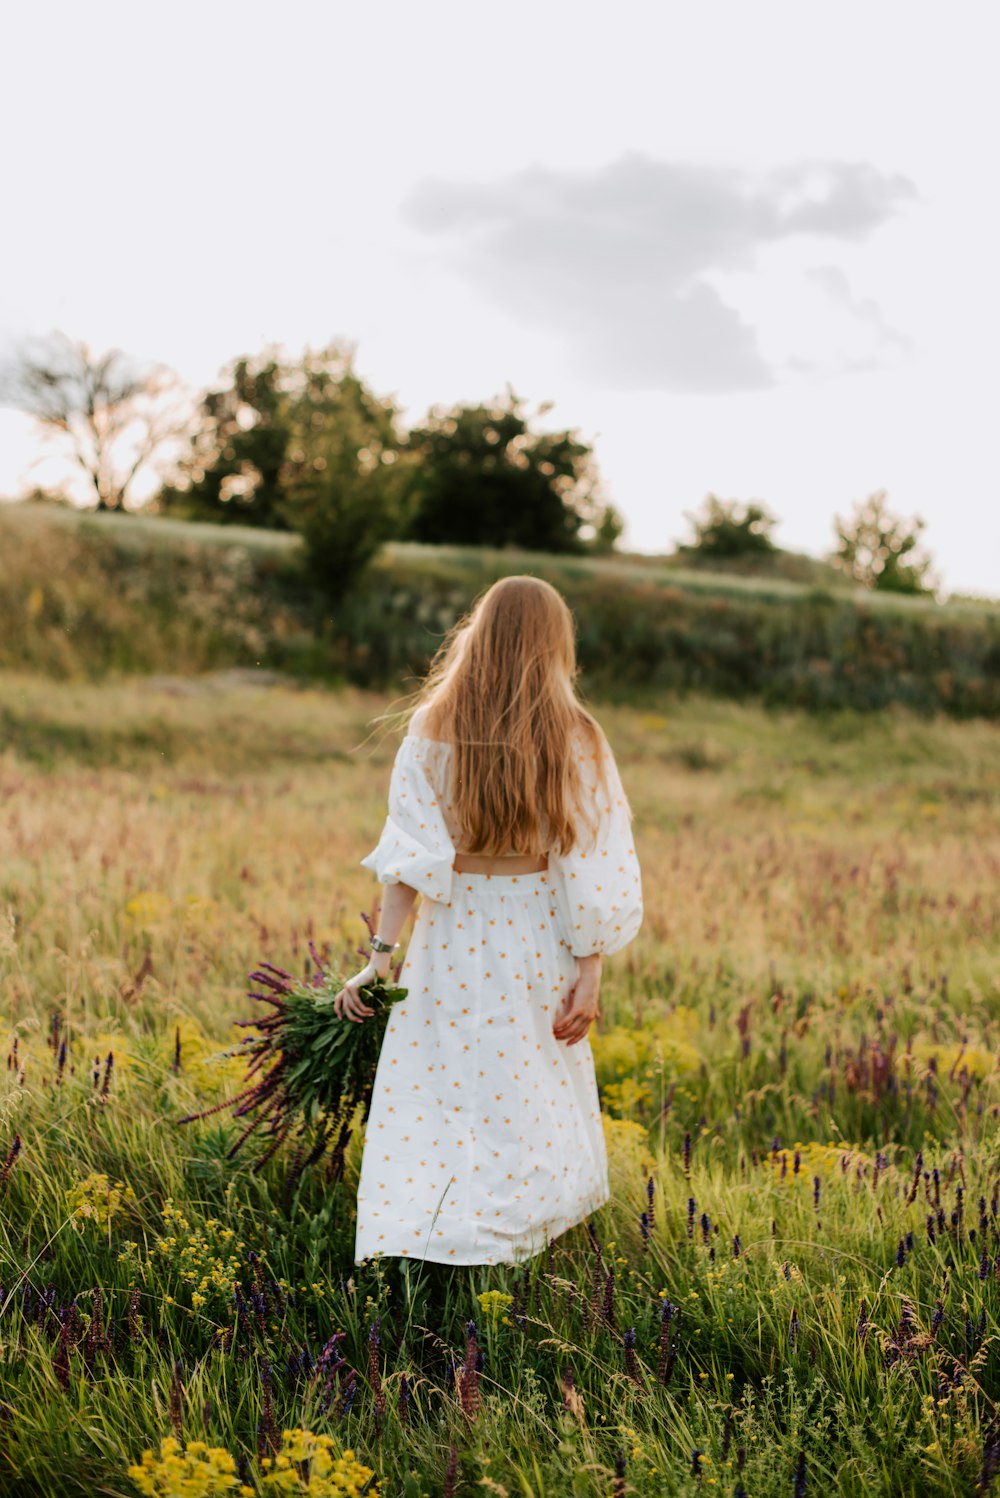 a girl in a white dress walking through a field